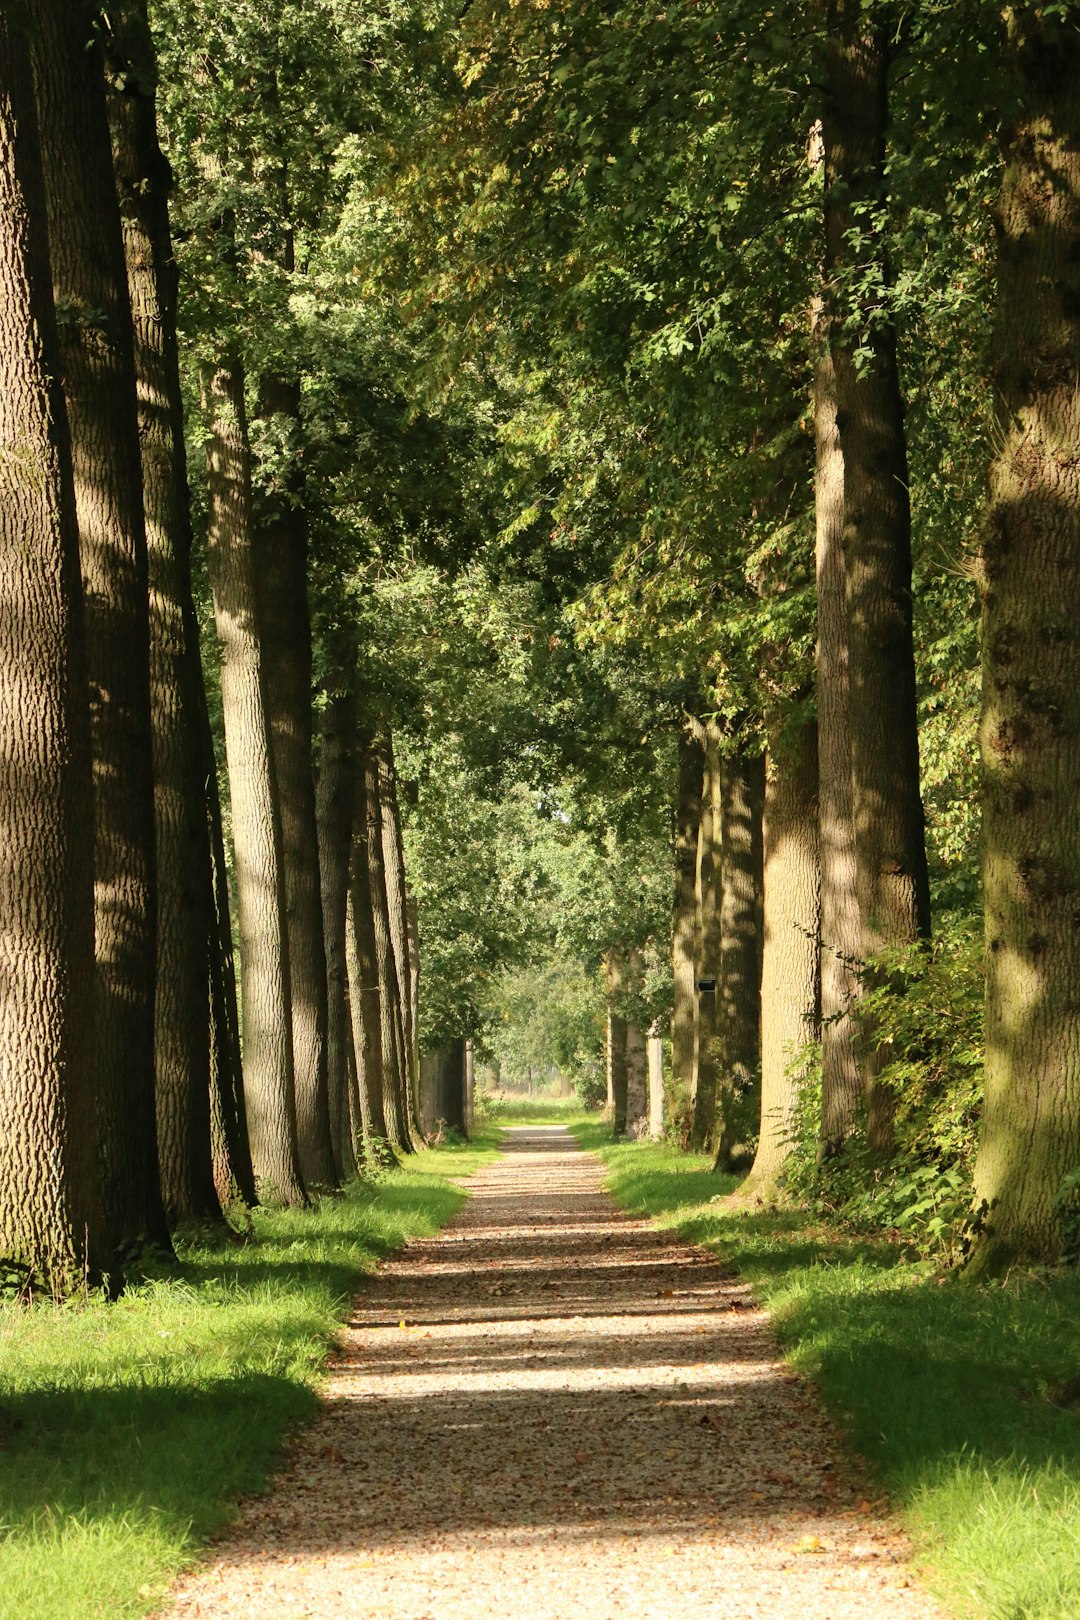 travelers stories about Forest in Castle De Haar, Netherlands